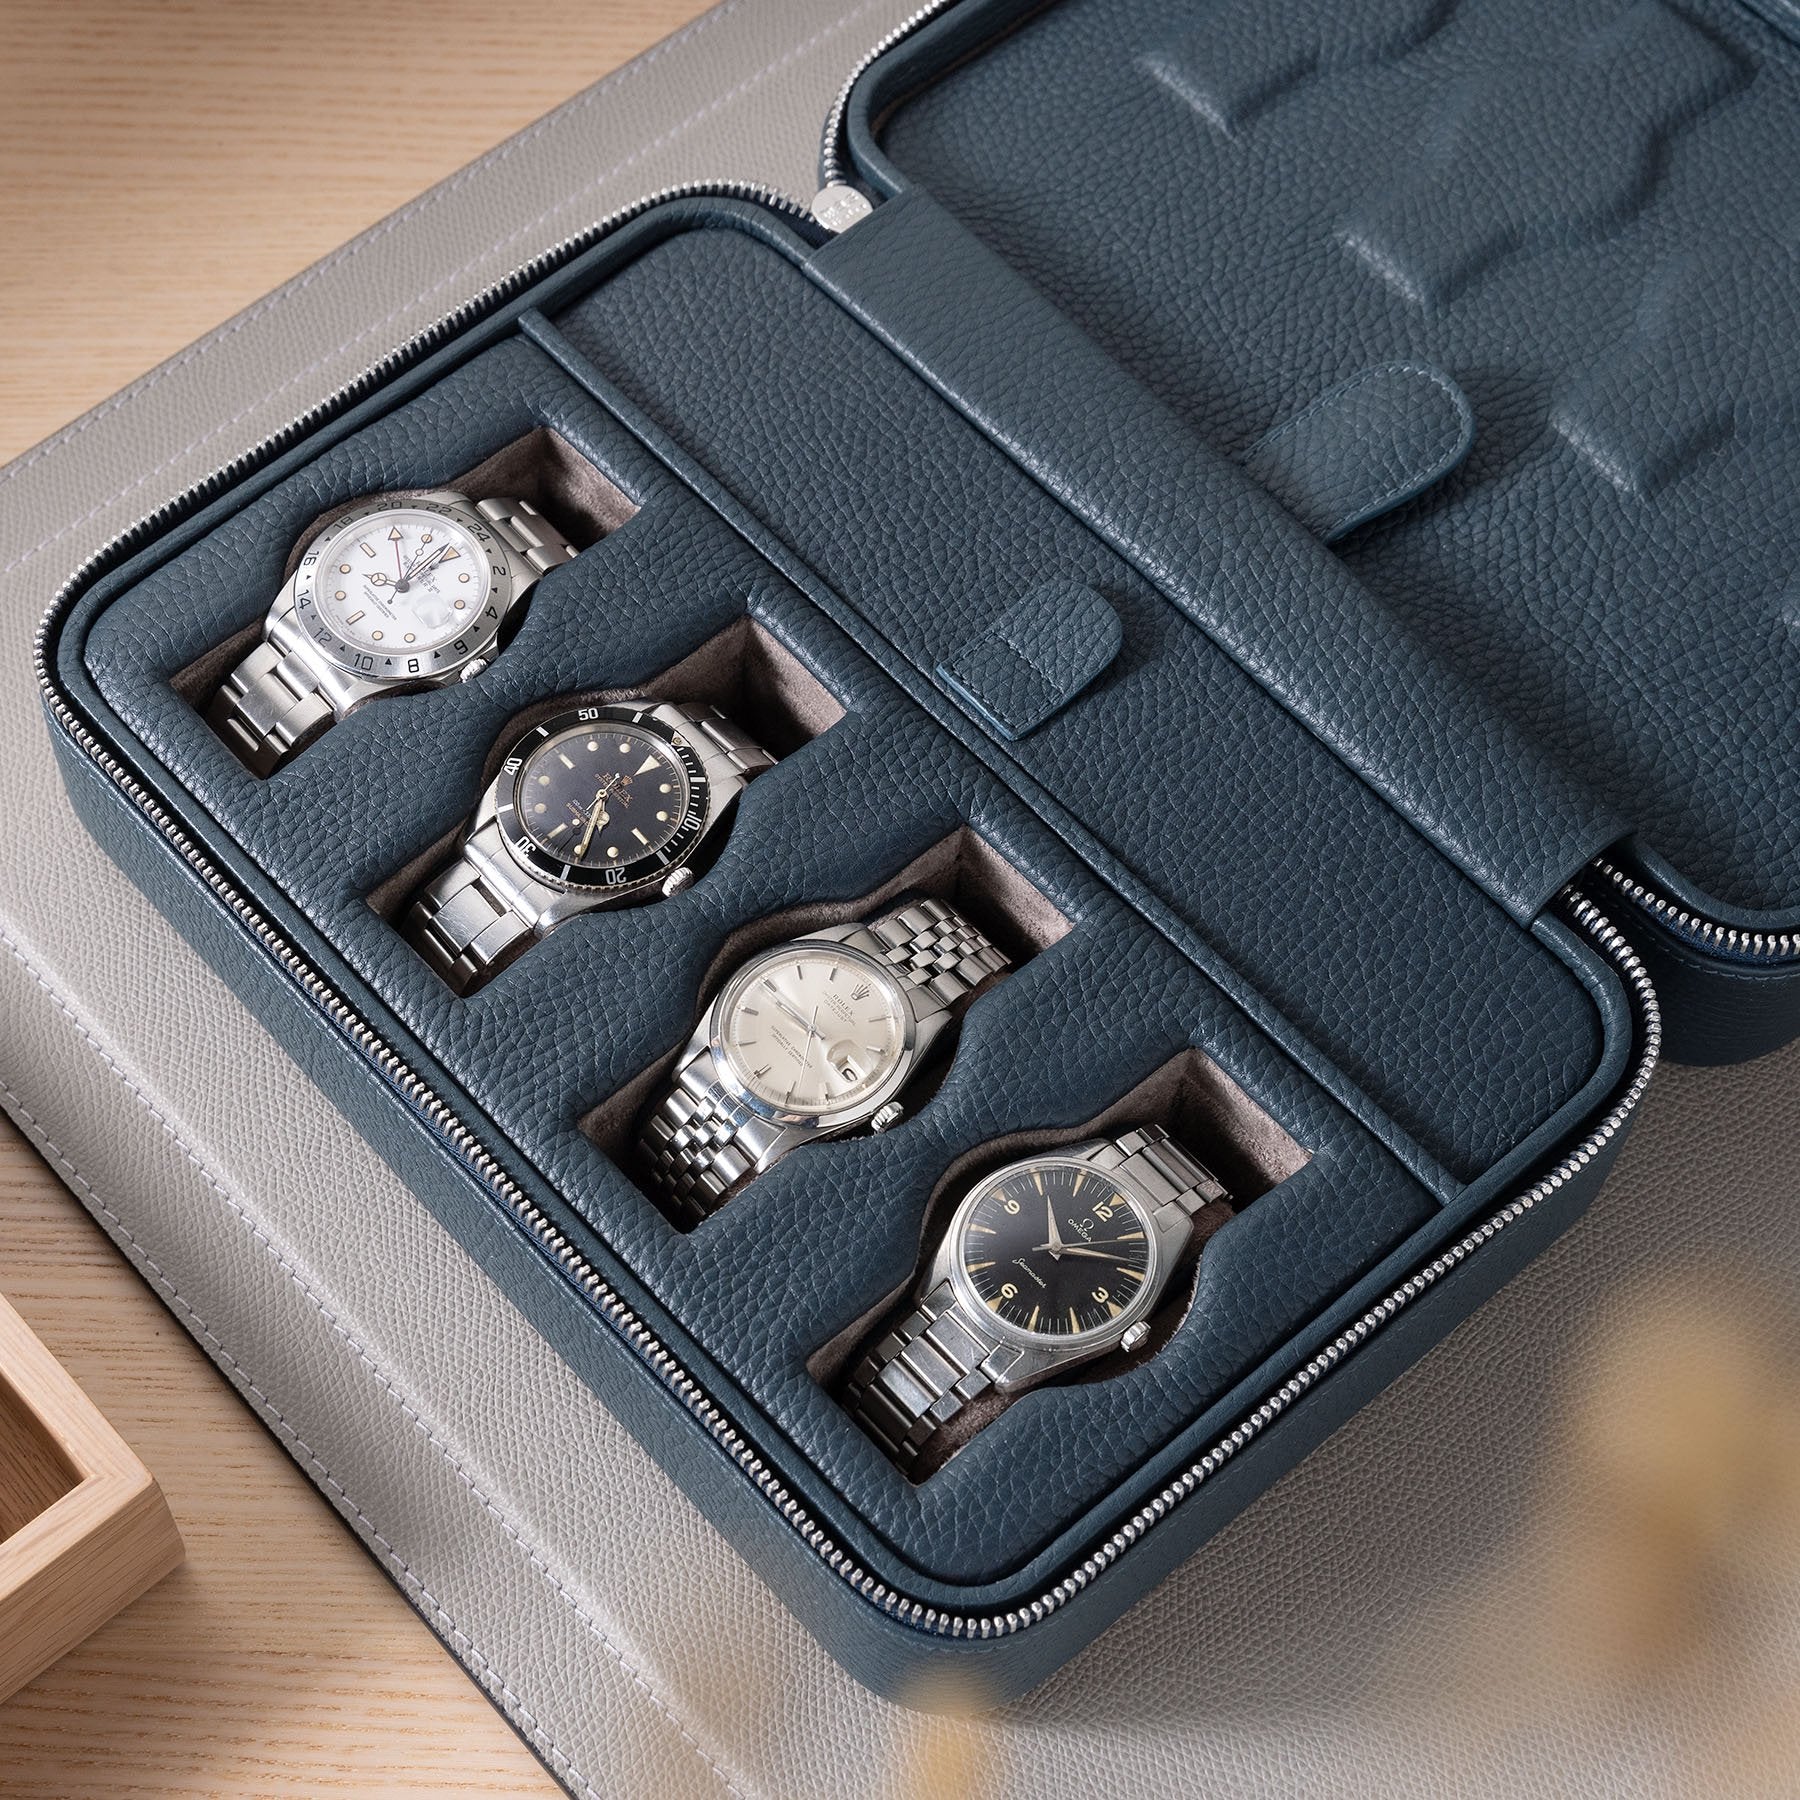 Prussian Blue Luxury Leather Watch Box